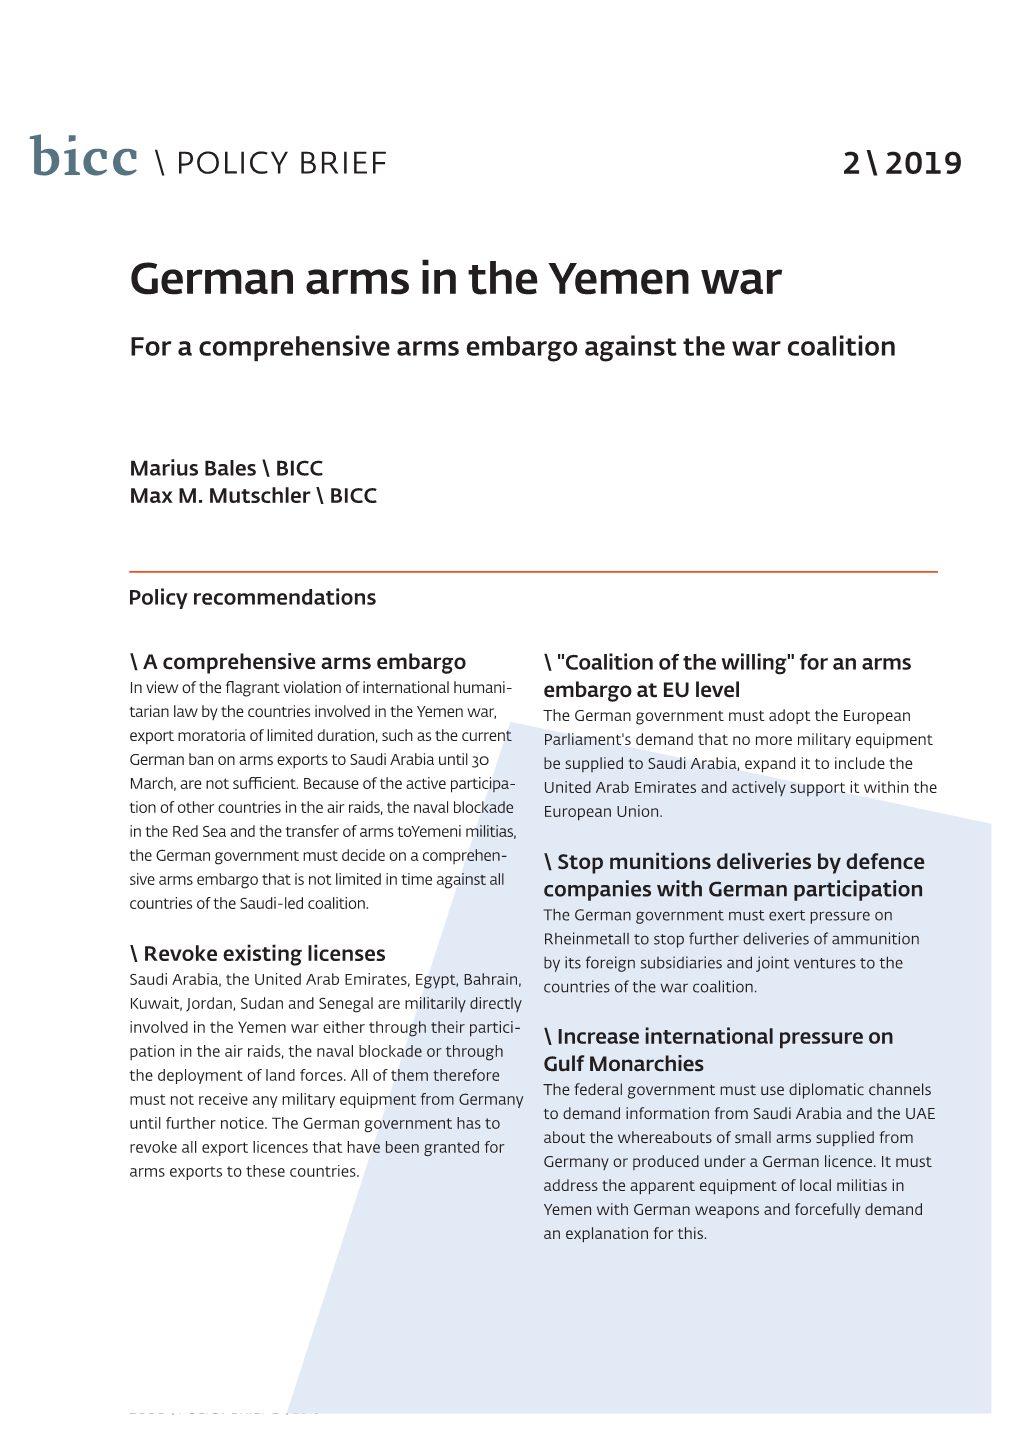 German Arms in the Yemen War